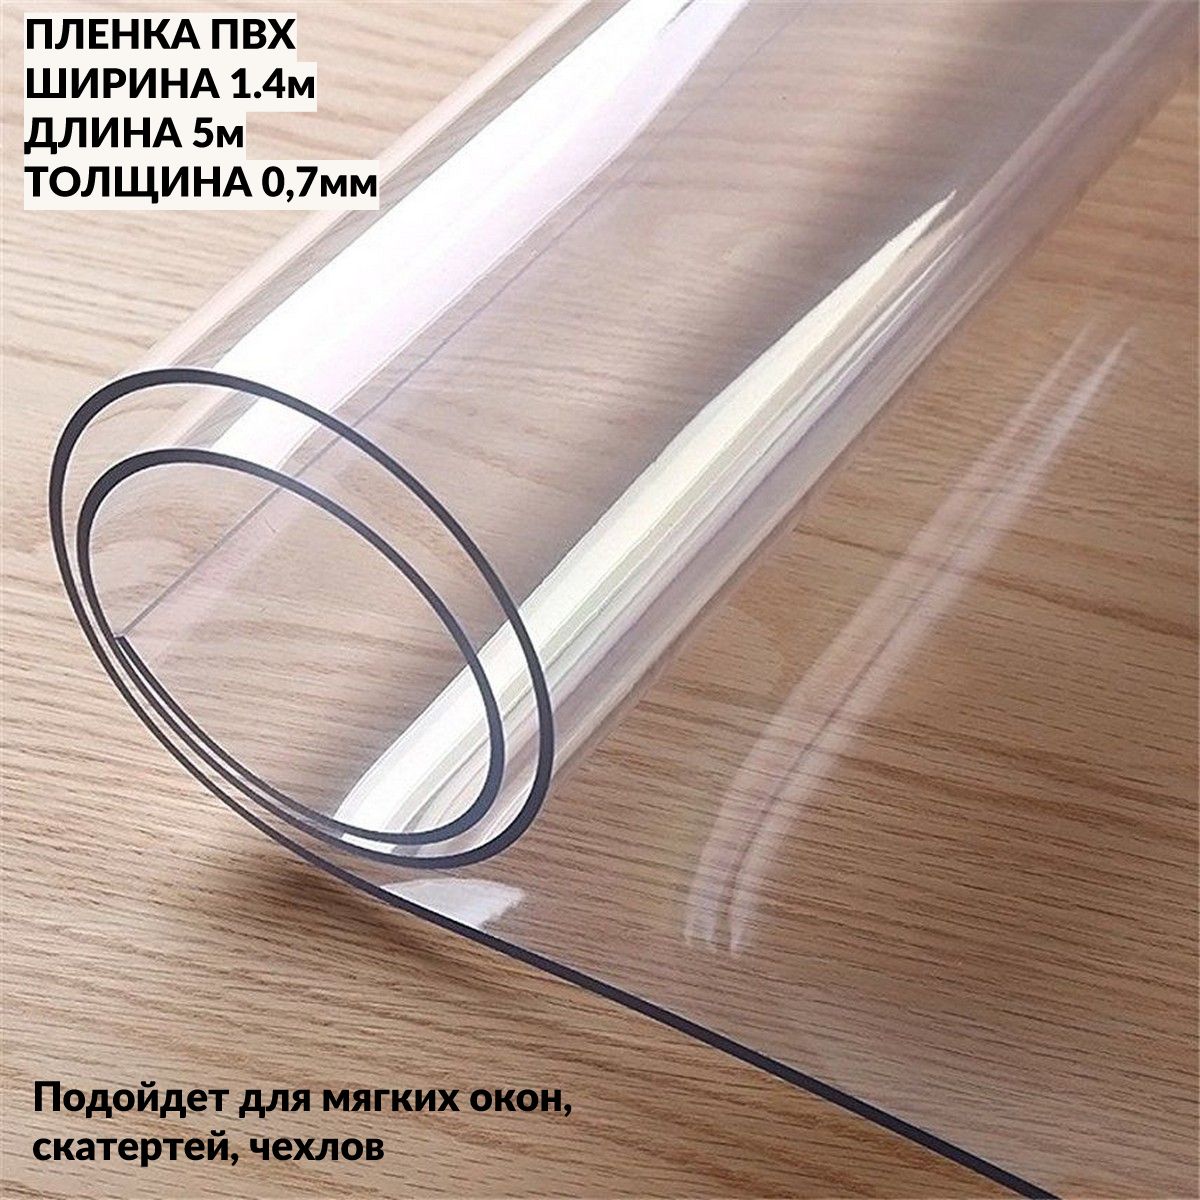 Гибкое стекло на стол прозрачная. Клеенка силиконовая прозрачная dekorelle 0,8*20м, толщина 0,8мм. Клеенка силиконовая прозрачная dekorelle 1,0*20м, толщина 0,8мм. Пленка ПВХ 2000 мкм. ПВХ плёнка прозрачная 700 микрон.